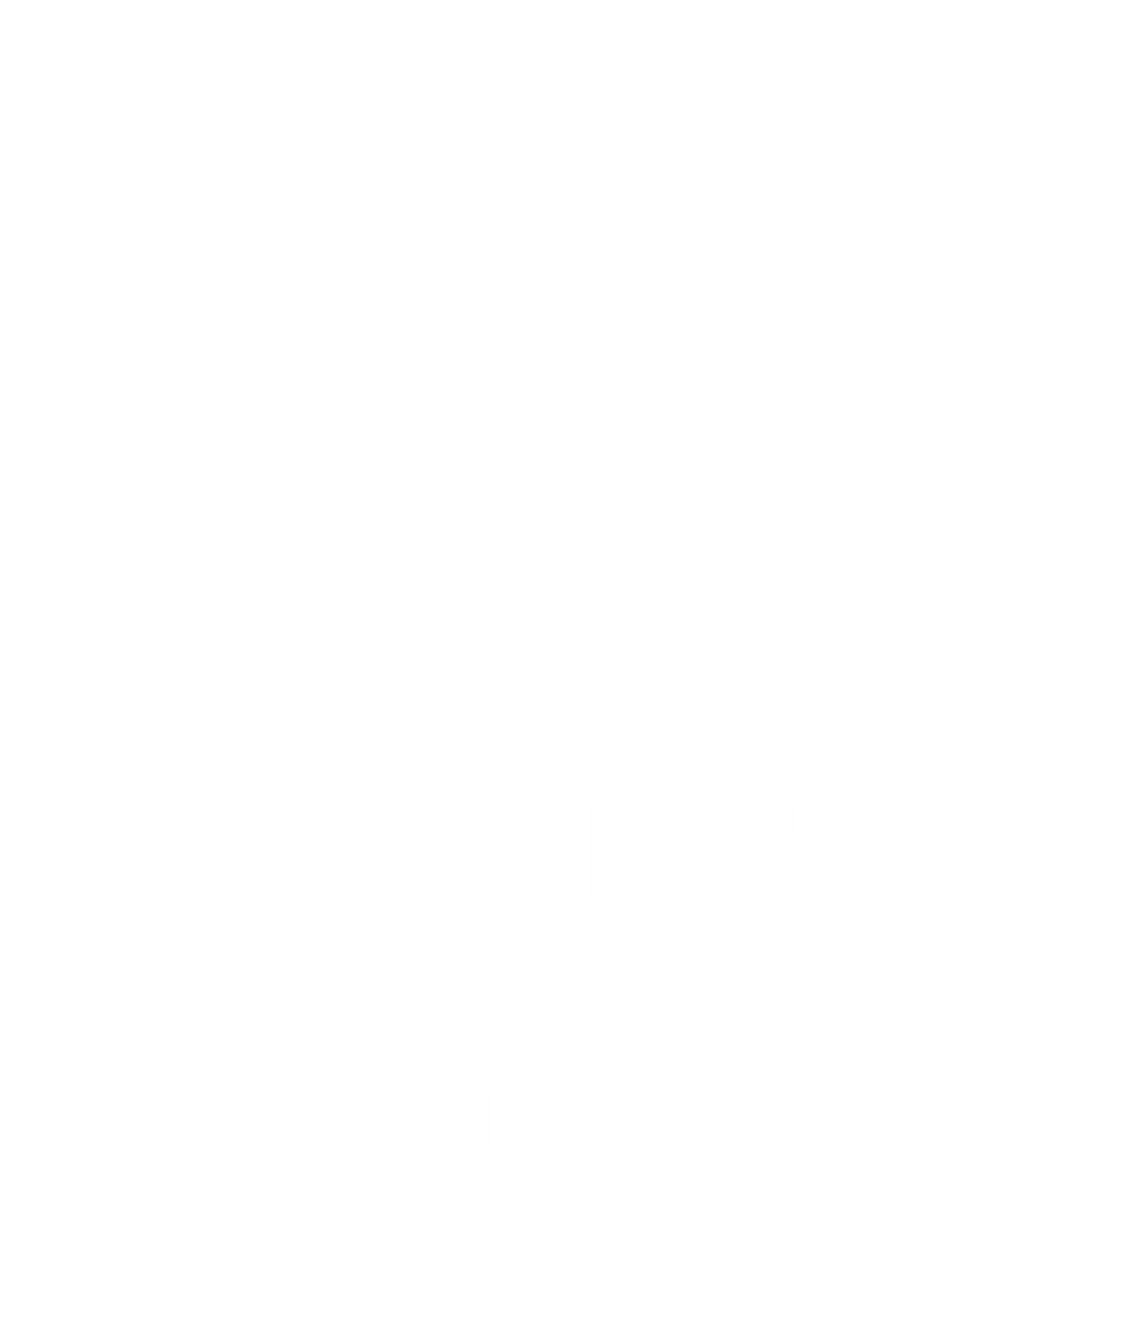 Kult tattoo - Salon tatuaży i piercing w Krakowie